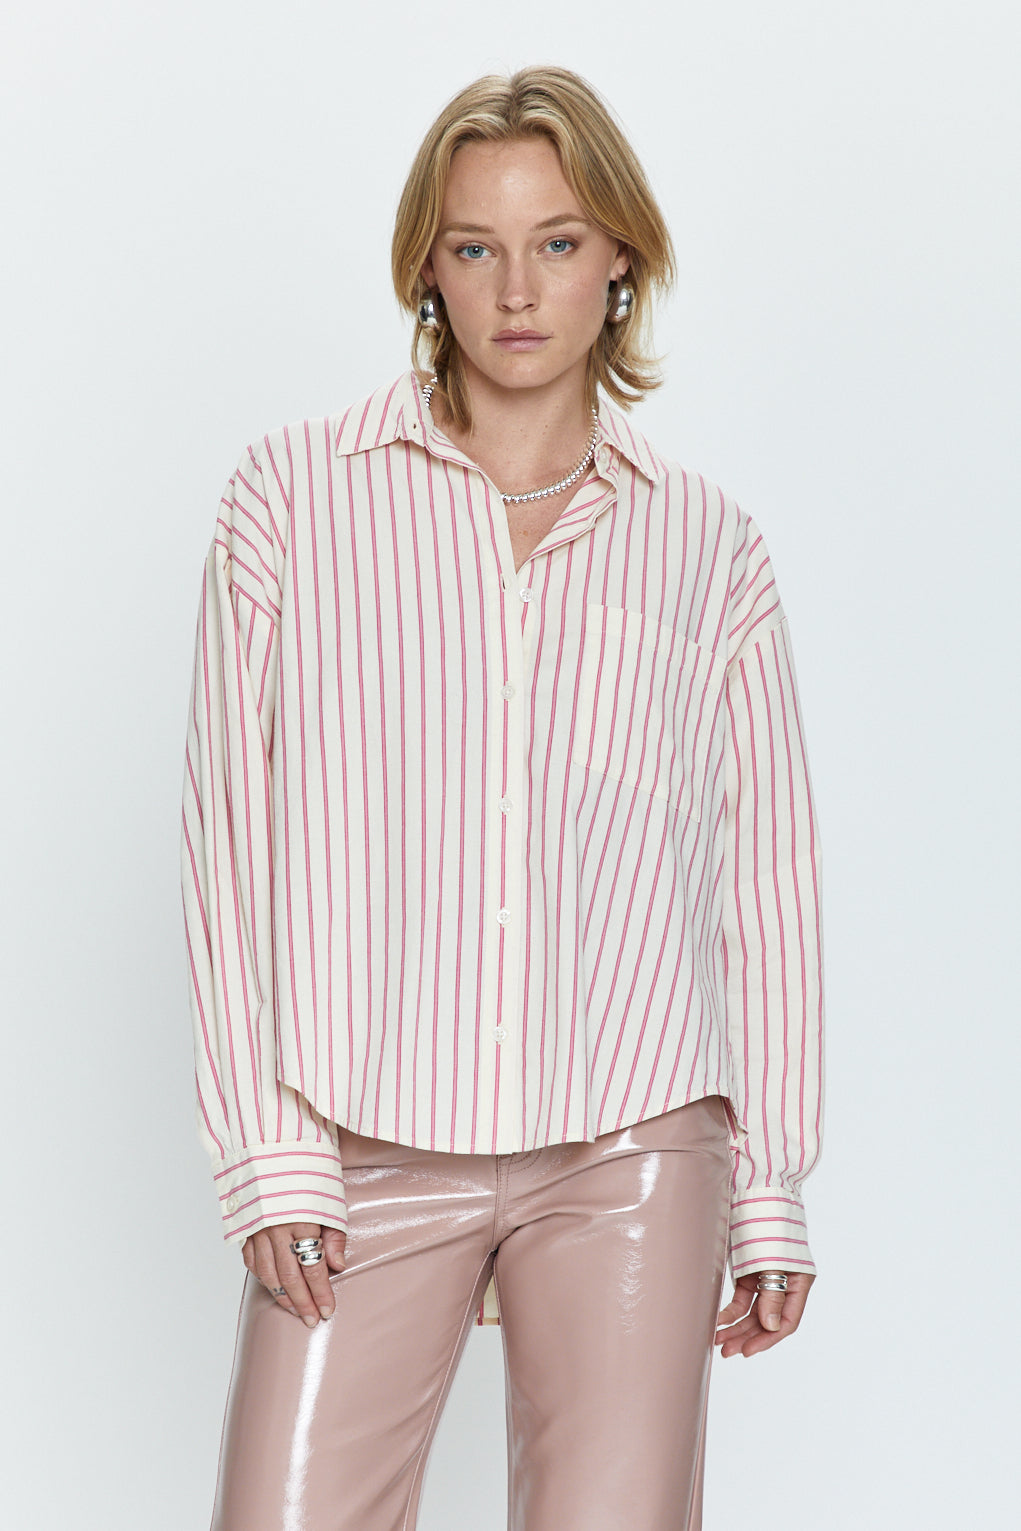 Sloane Oversized Button Down Shirt - Rose Multi Stripe
            
              Sale